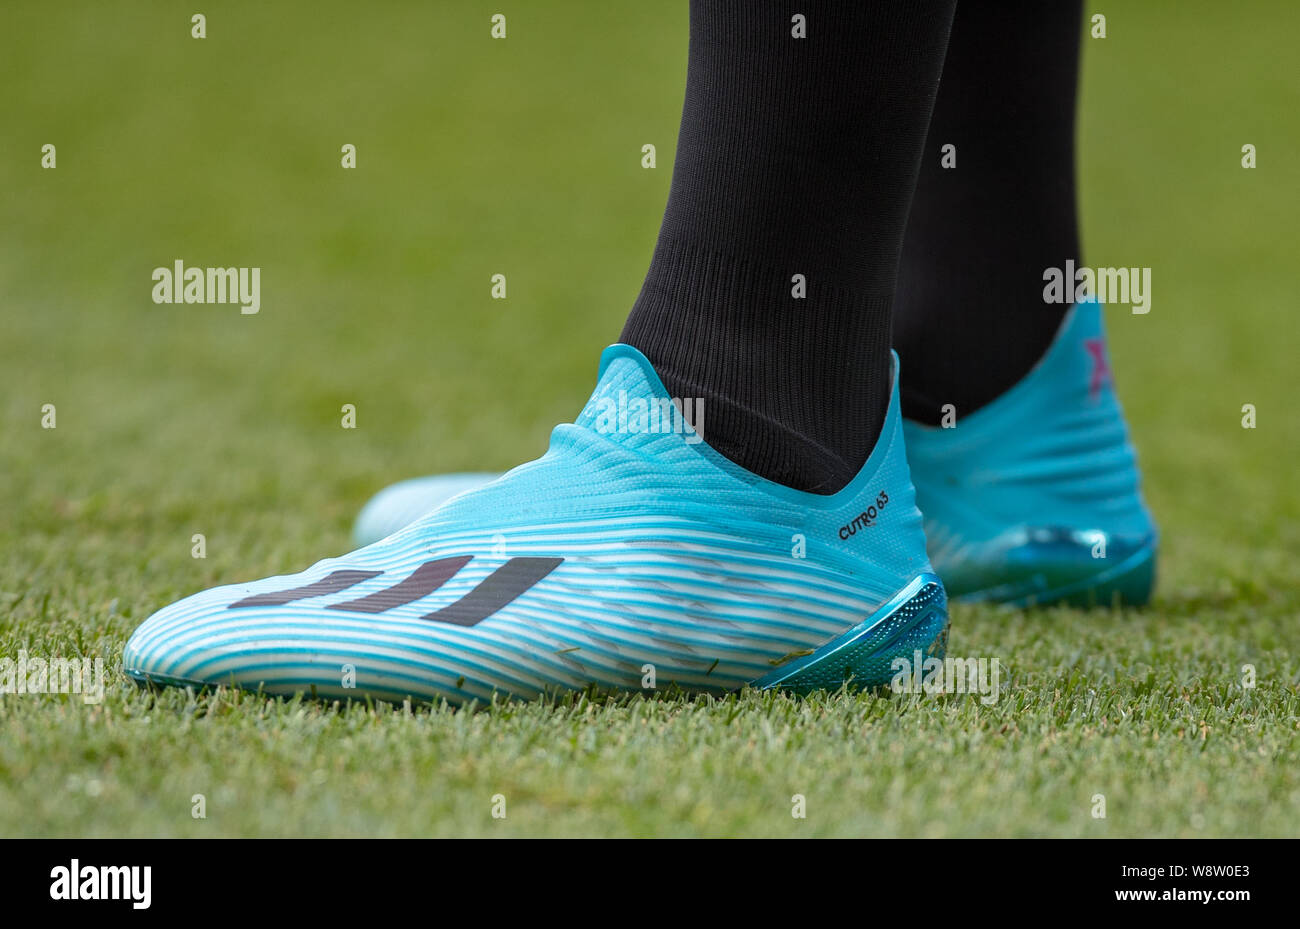 Leicester, Reino 11 Aug, 2019. Las botas de fútbol Adidas x de Patrick Cutrone de Lobos mostrando CUTRO durante partido de Liga entre Leicester City y Wolverhampton Wanderers